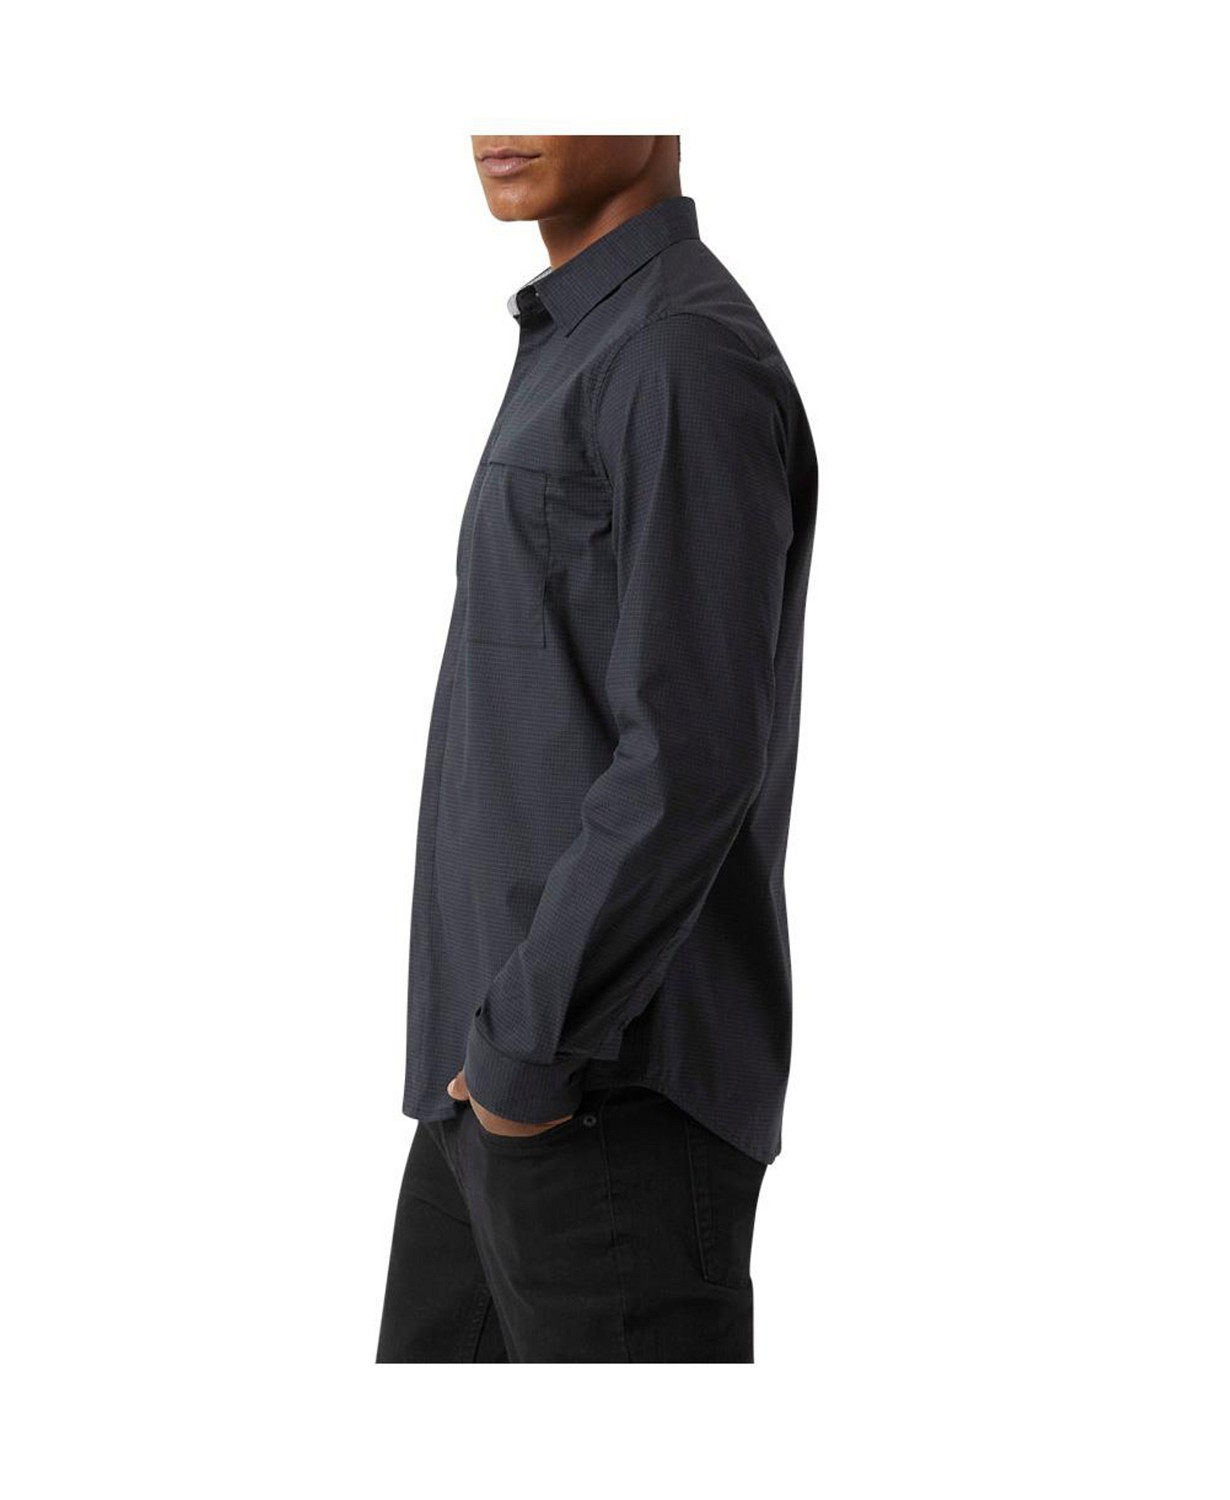 DKNY Mens City Grid Stretch Long Sleeve Shirt